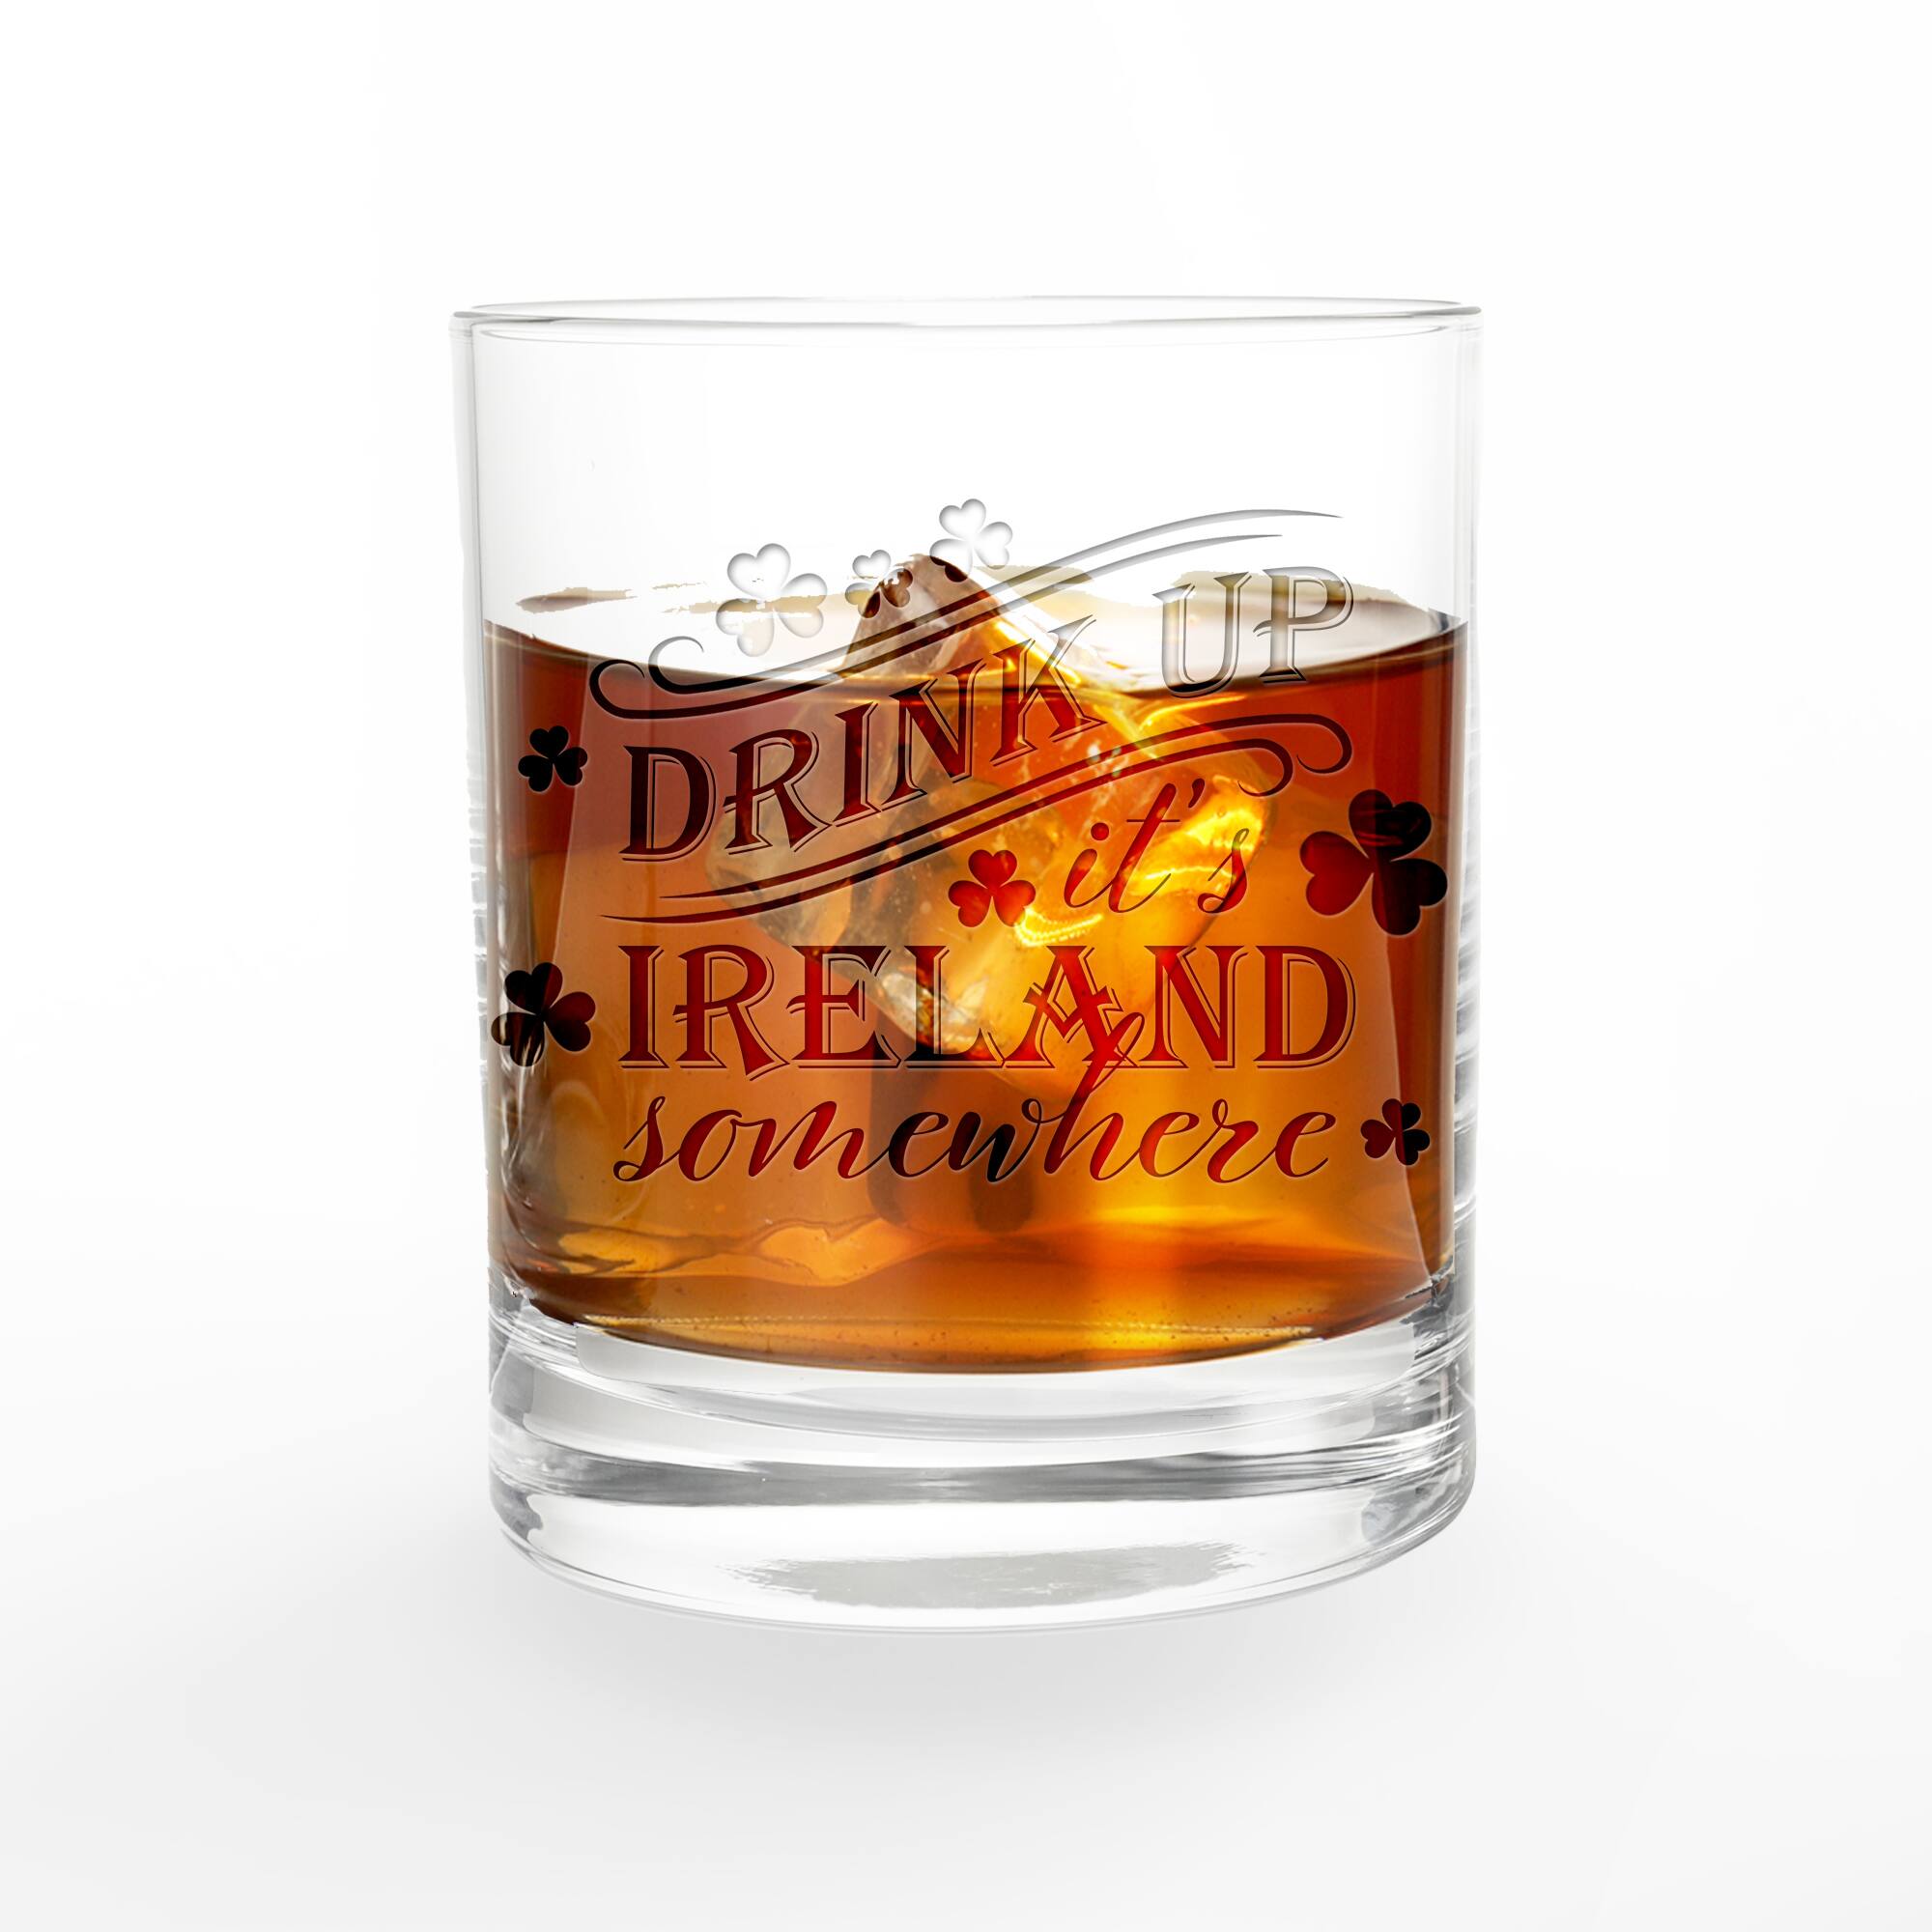 11oz. Drink Up It&#x27;s Ireland Somewhere Engraved Whiskey Glass